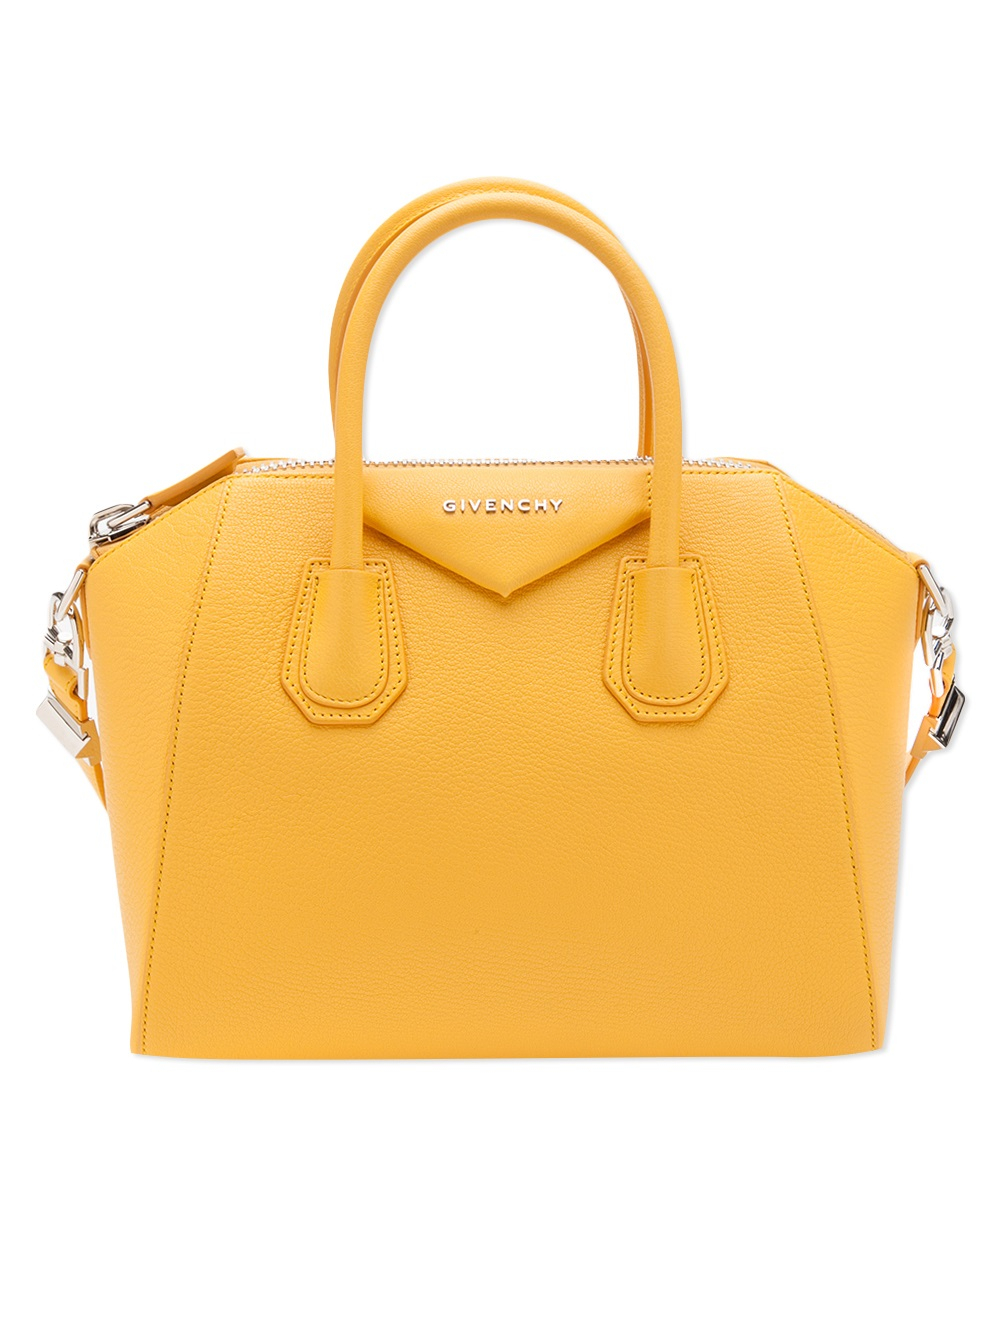 Lyst - Givenchy Antigona Small Bag in Yellow